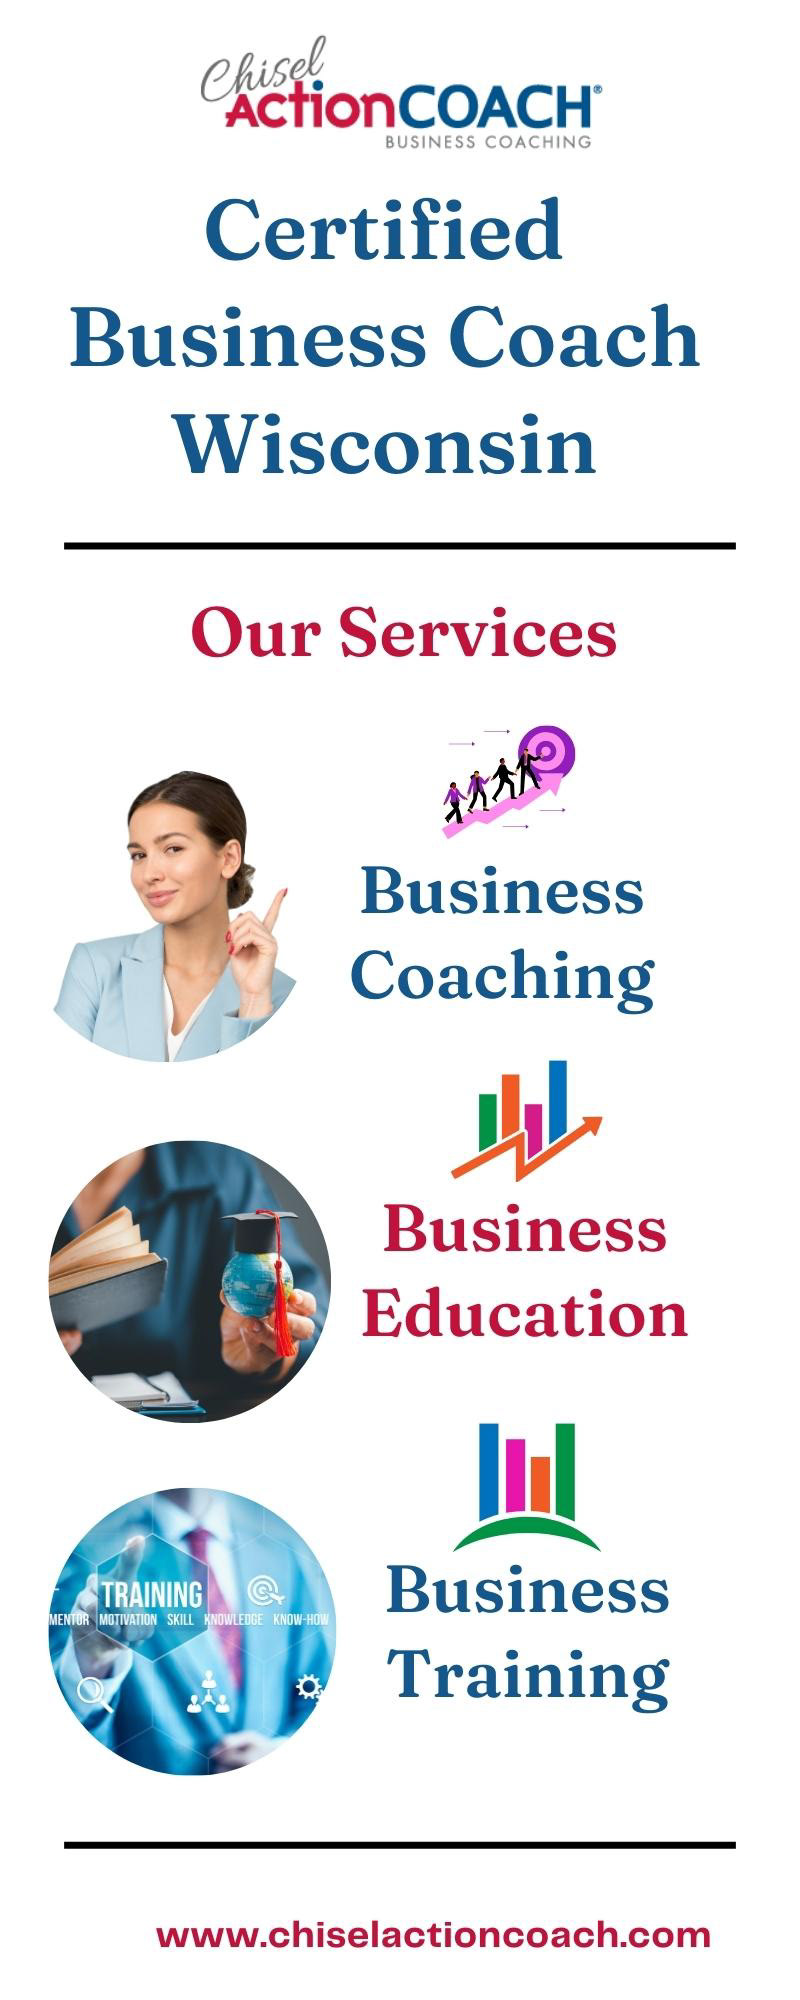 business coaching Business  Eduction Business Training